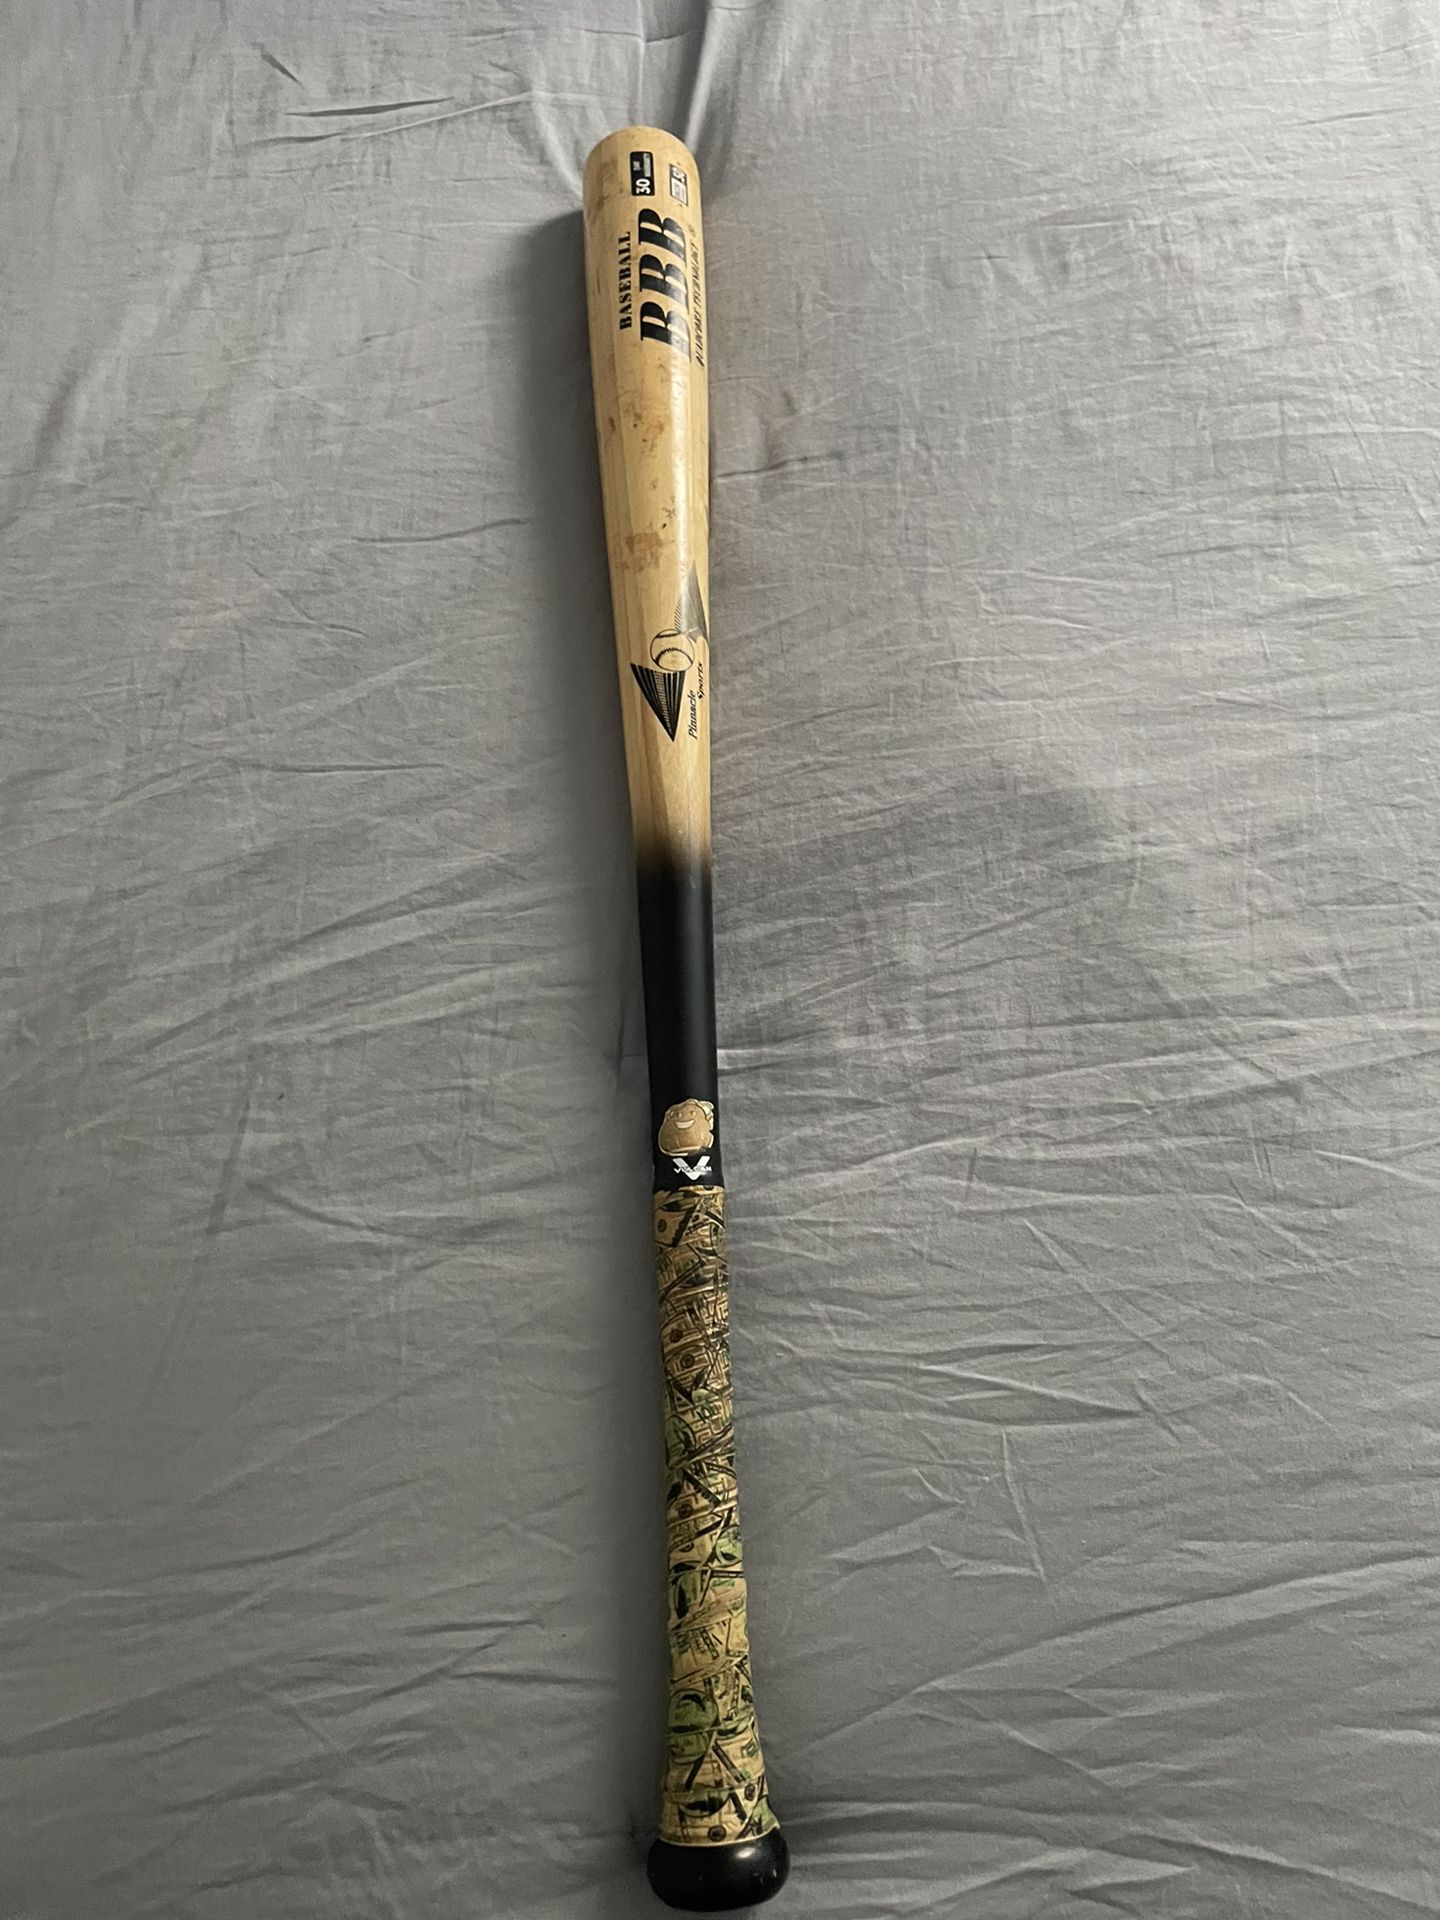 BBB baseball bat BBCOR certified. 32in 